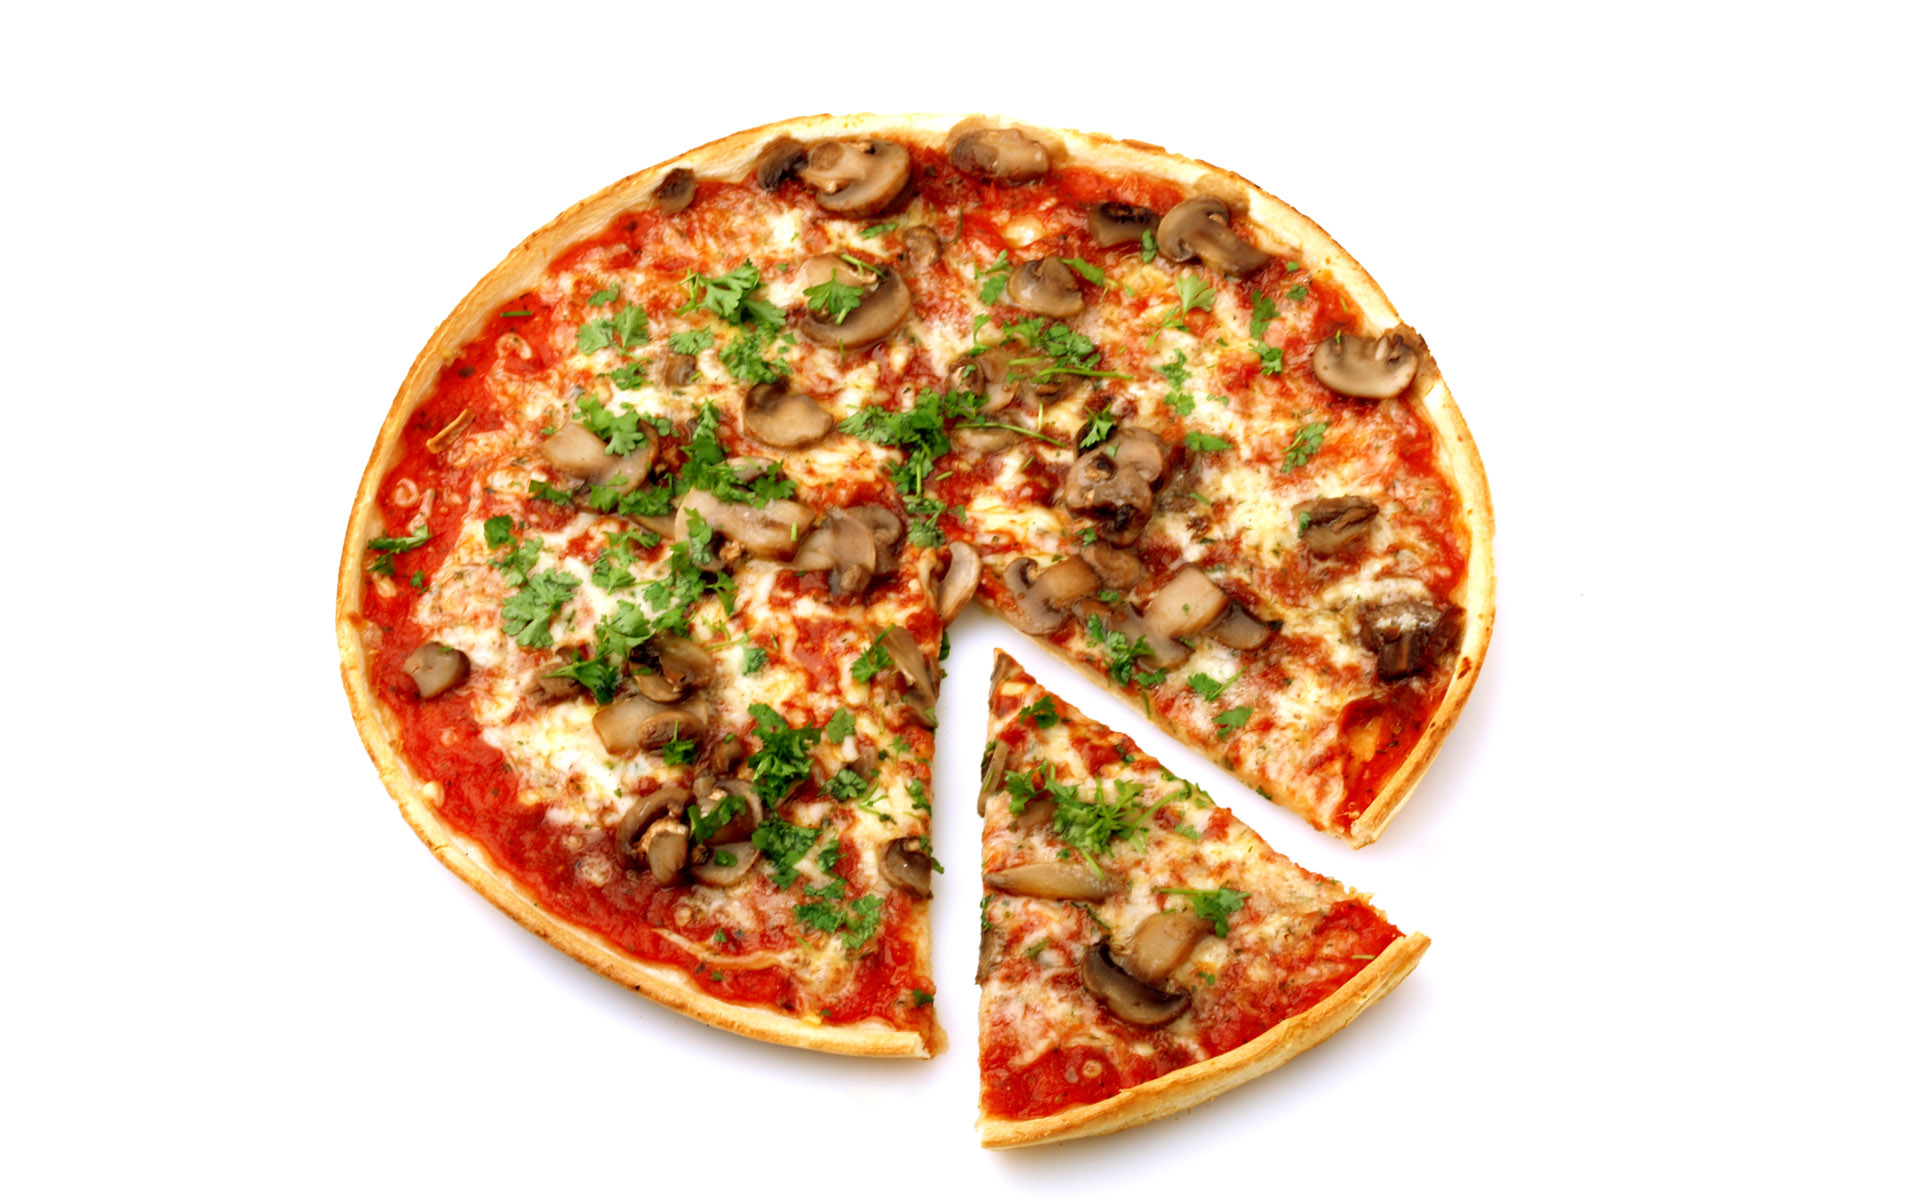 538770 descargar imagen alimento, pizza, almuerzo, champiñón: fondos de pantalla y protectores de pantalla gratis